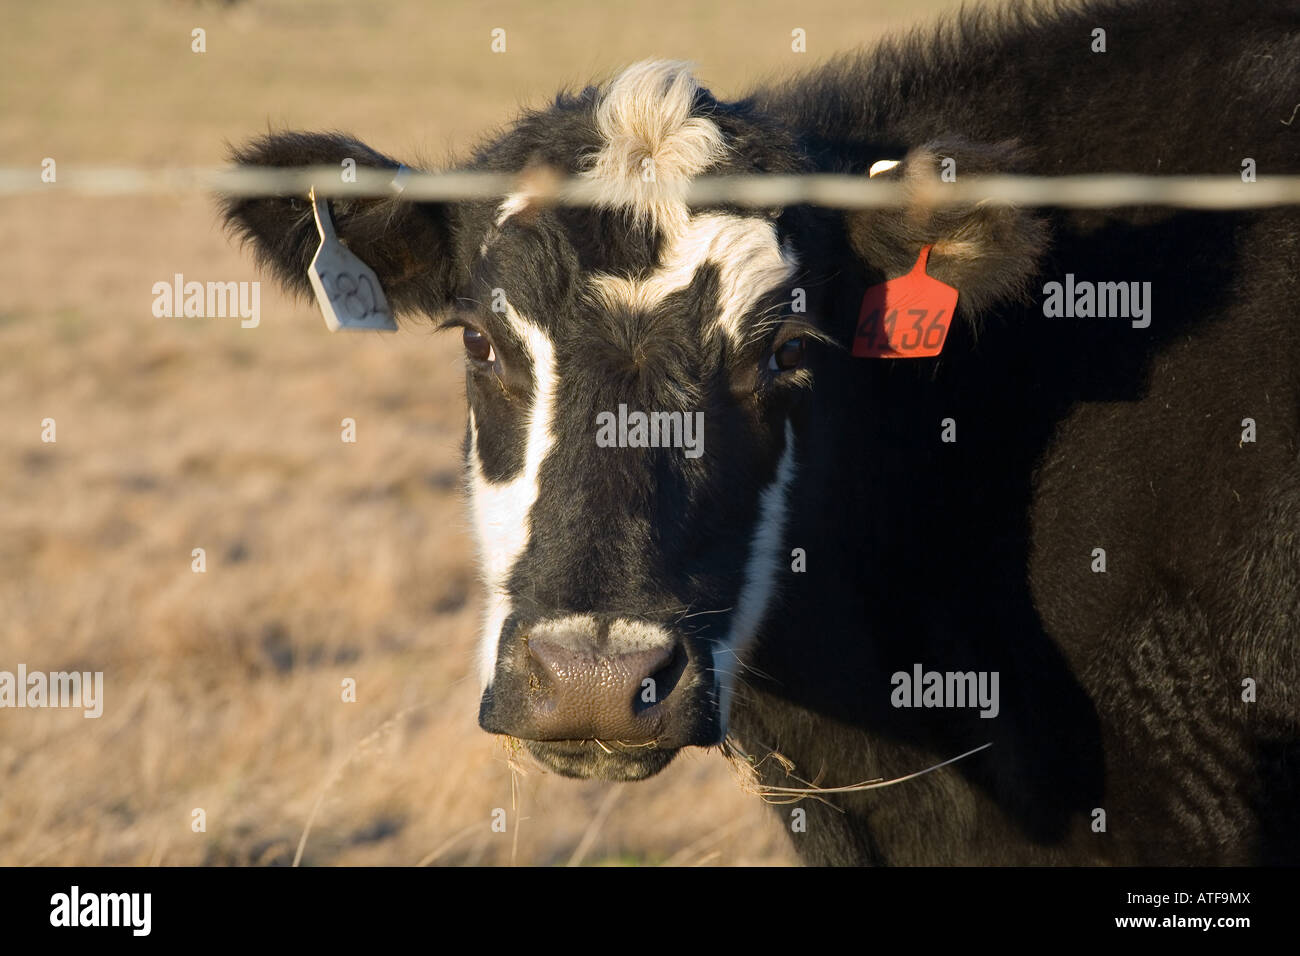 cattle in california Stock Photo